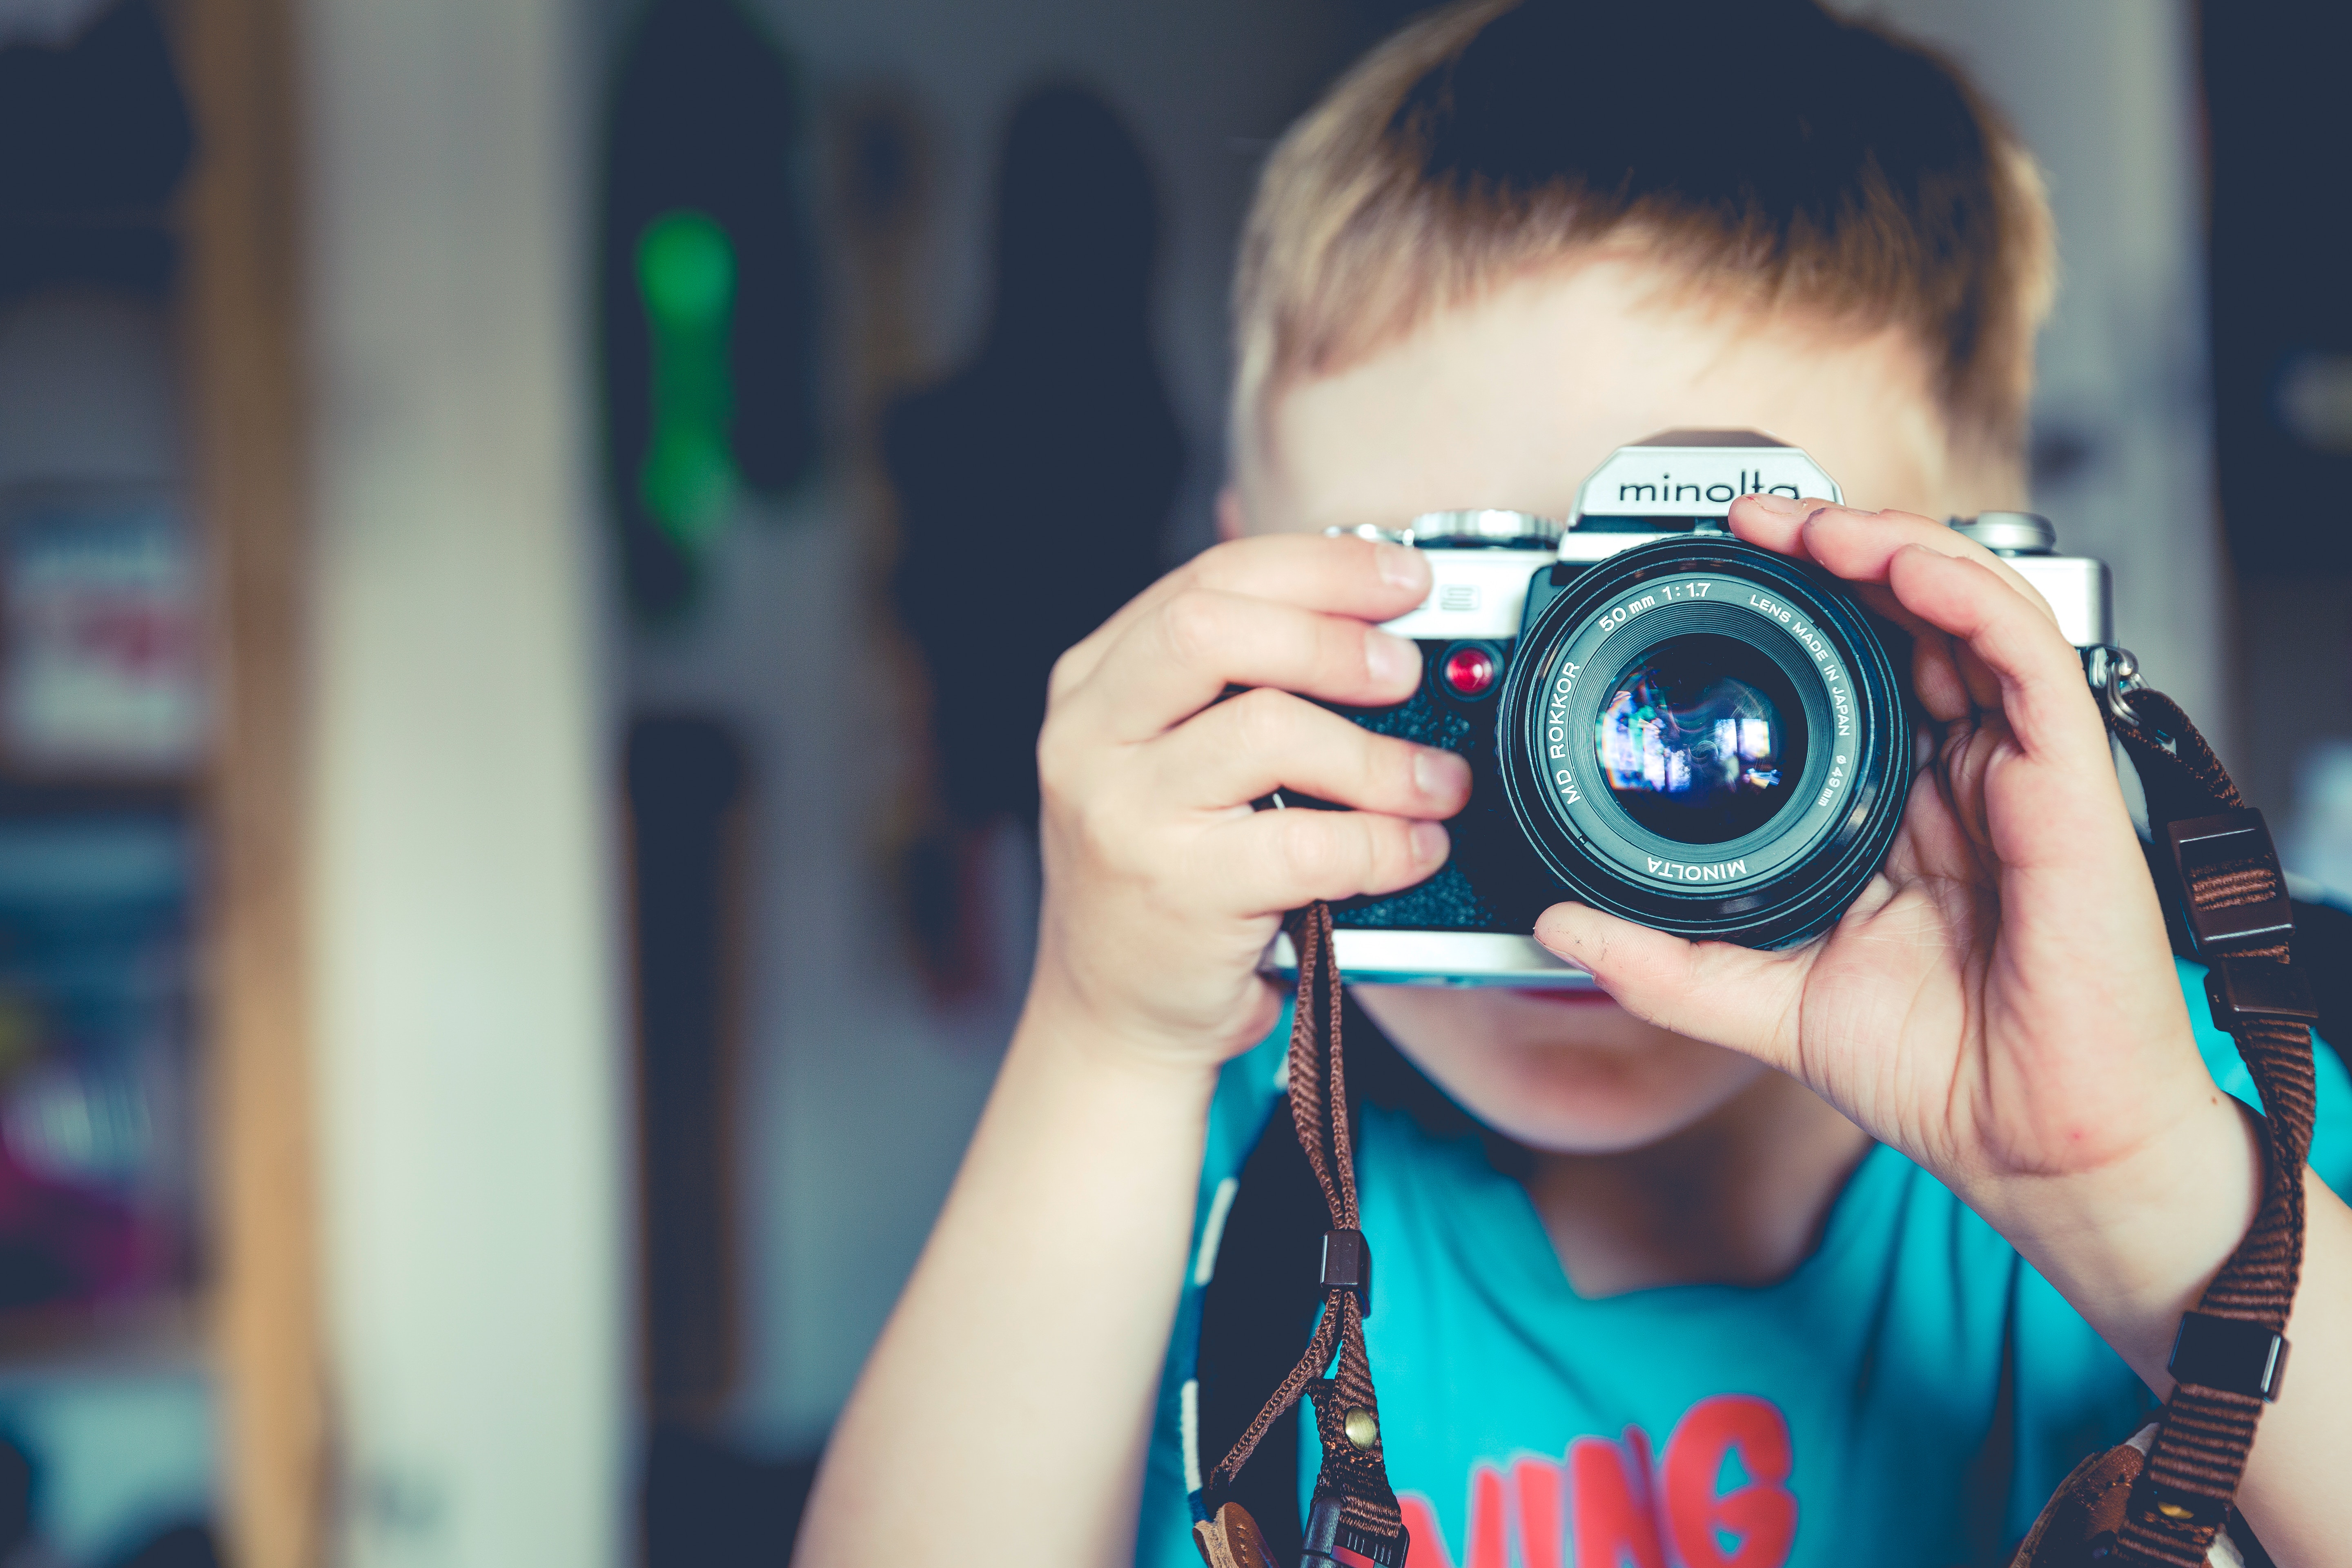 5760x3840 #boy, #Free image, #len, #focu, #photographer, #photographic equipment, #smile, #photo, #photograph, #minoltum, #childhood, #hand, #child, #camera, #kid, #photography. Mocah HD Wallpaper